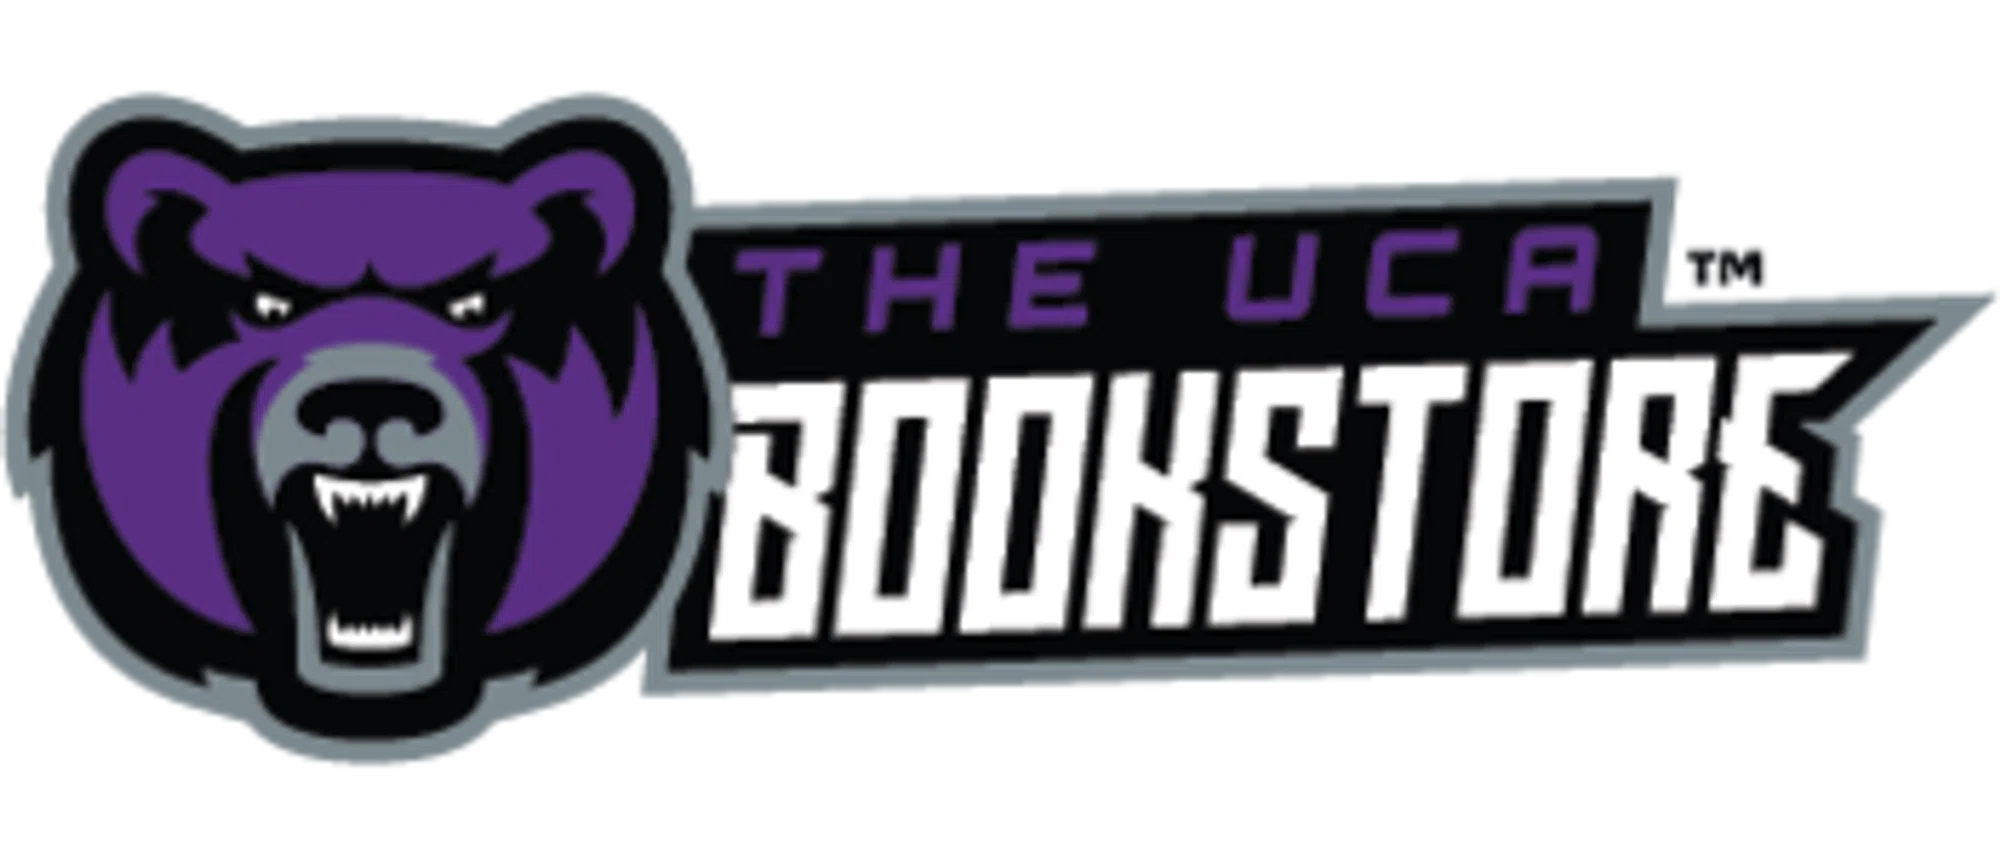 The UCA Bookstore